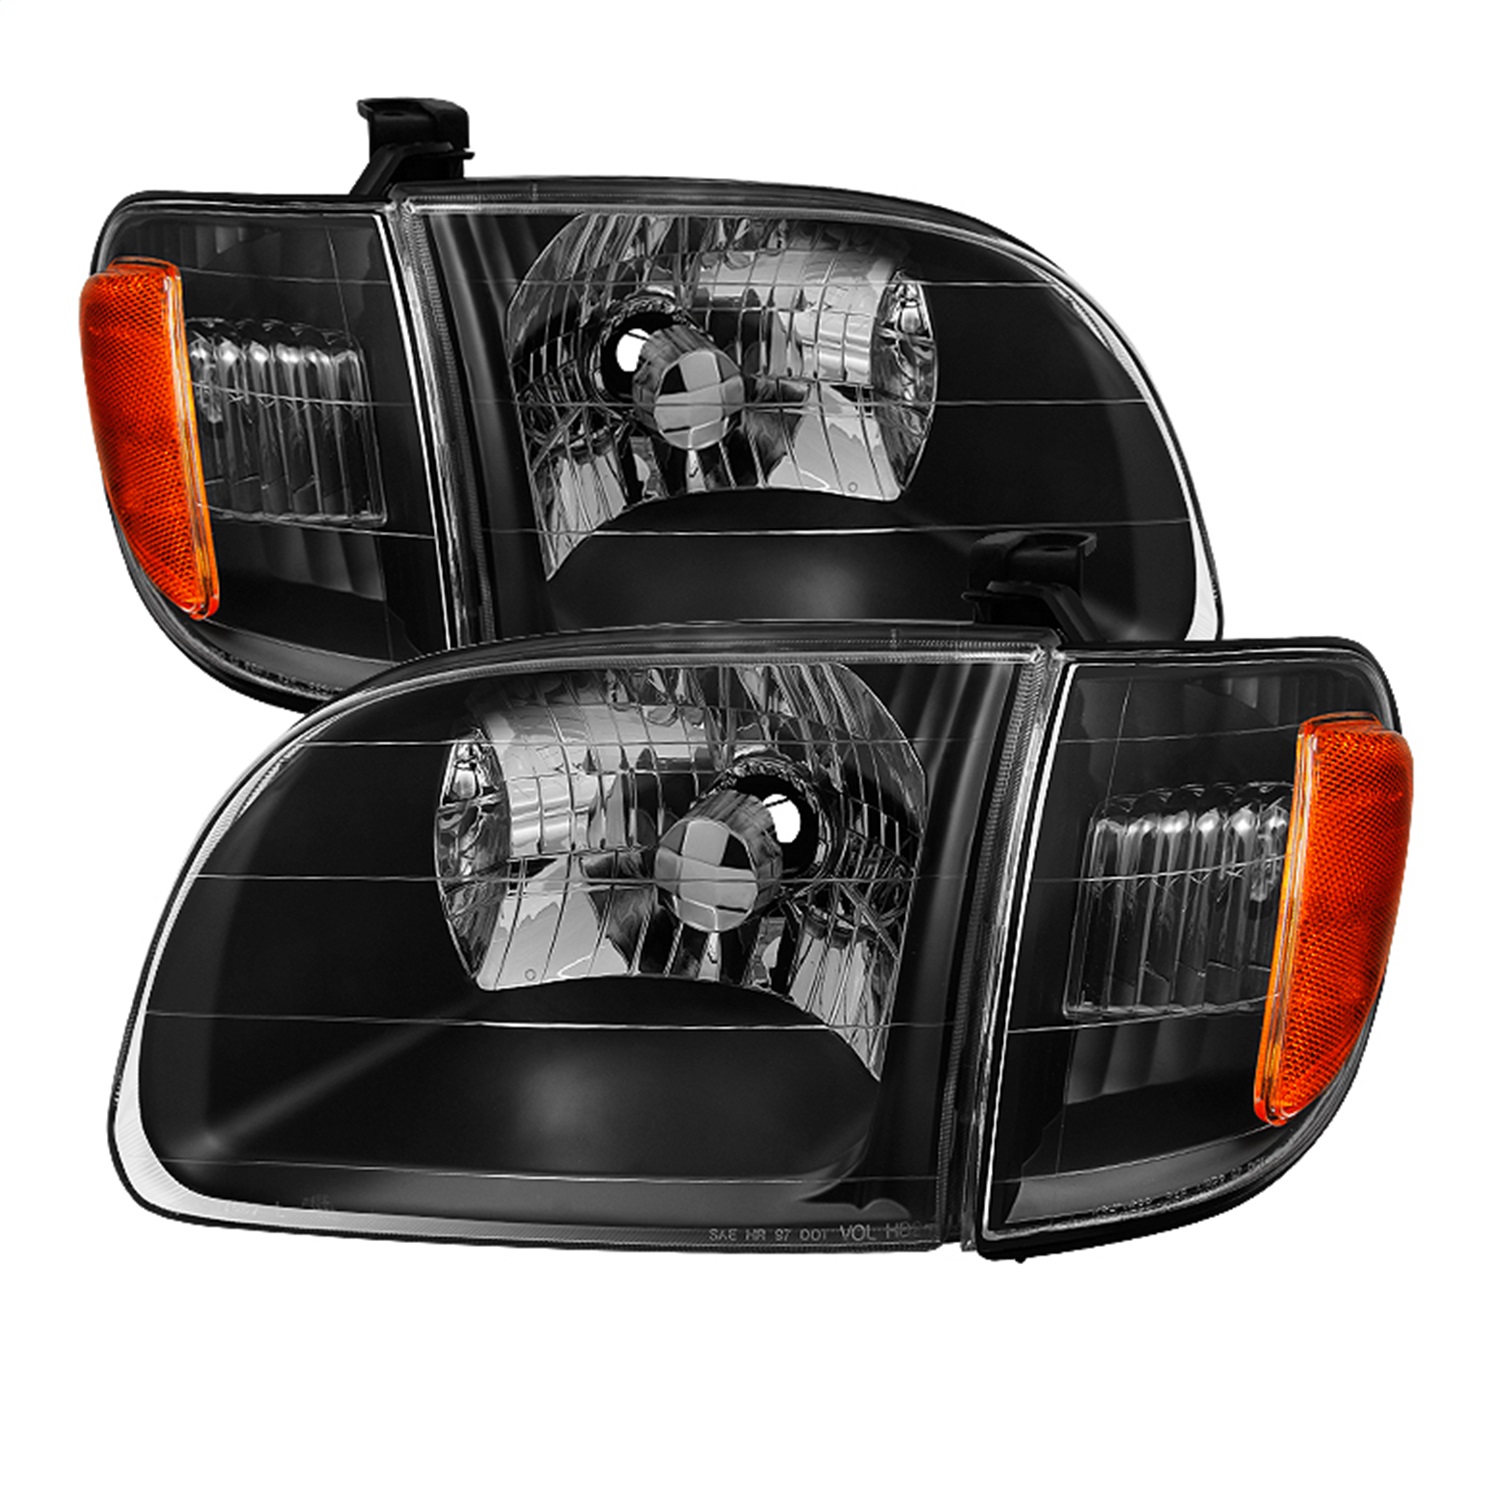 Spyder Auto 9033292 XTune Headlights Fits 00-04 Tundra